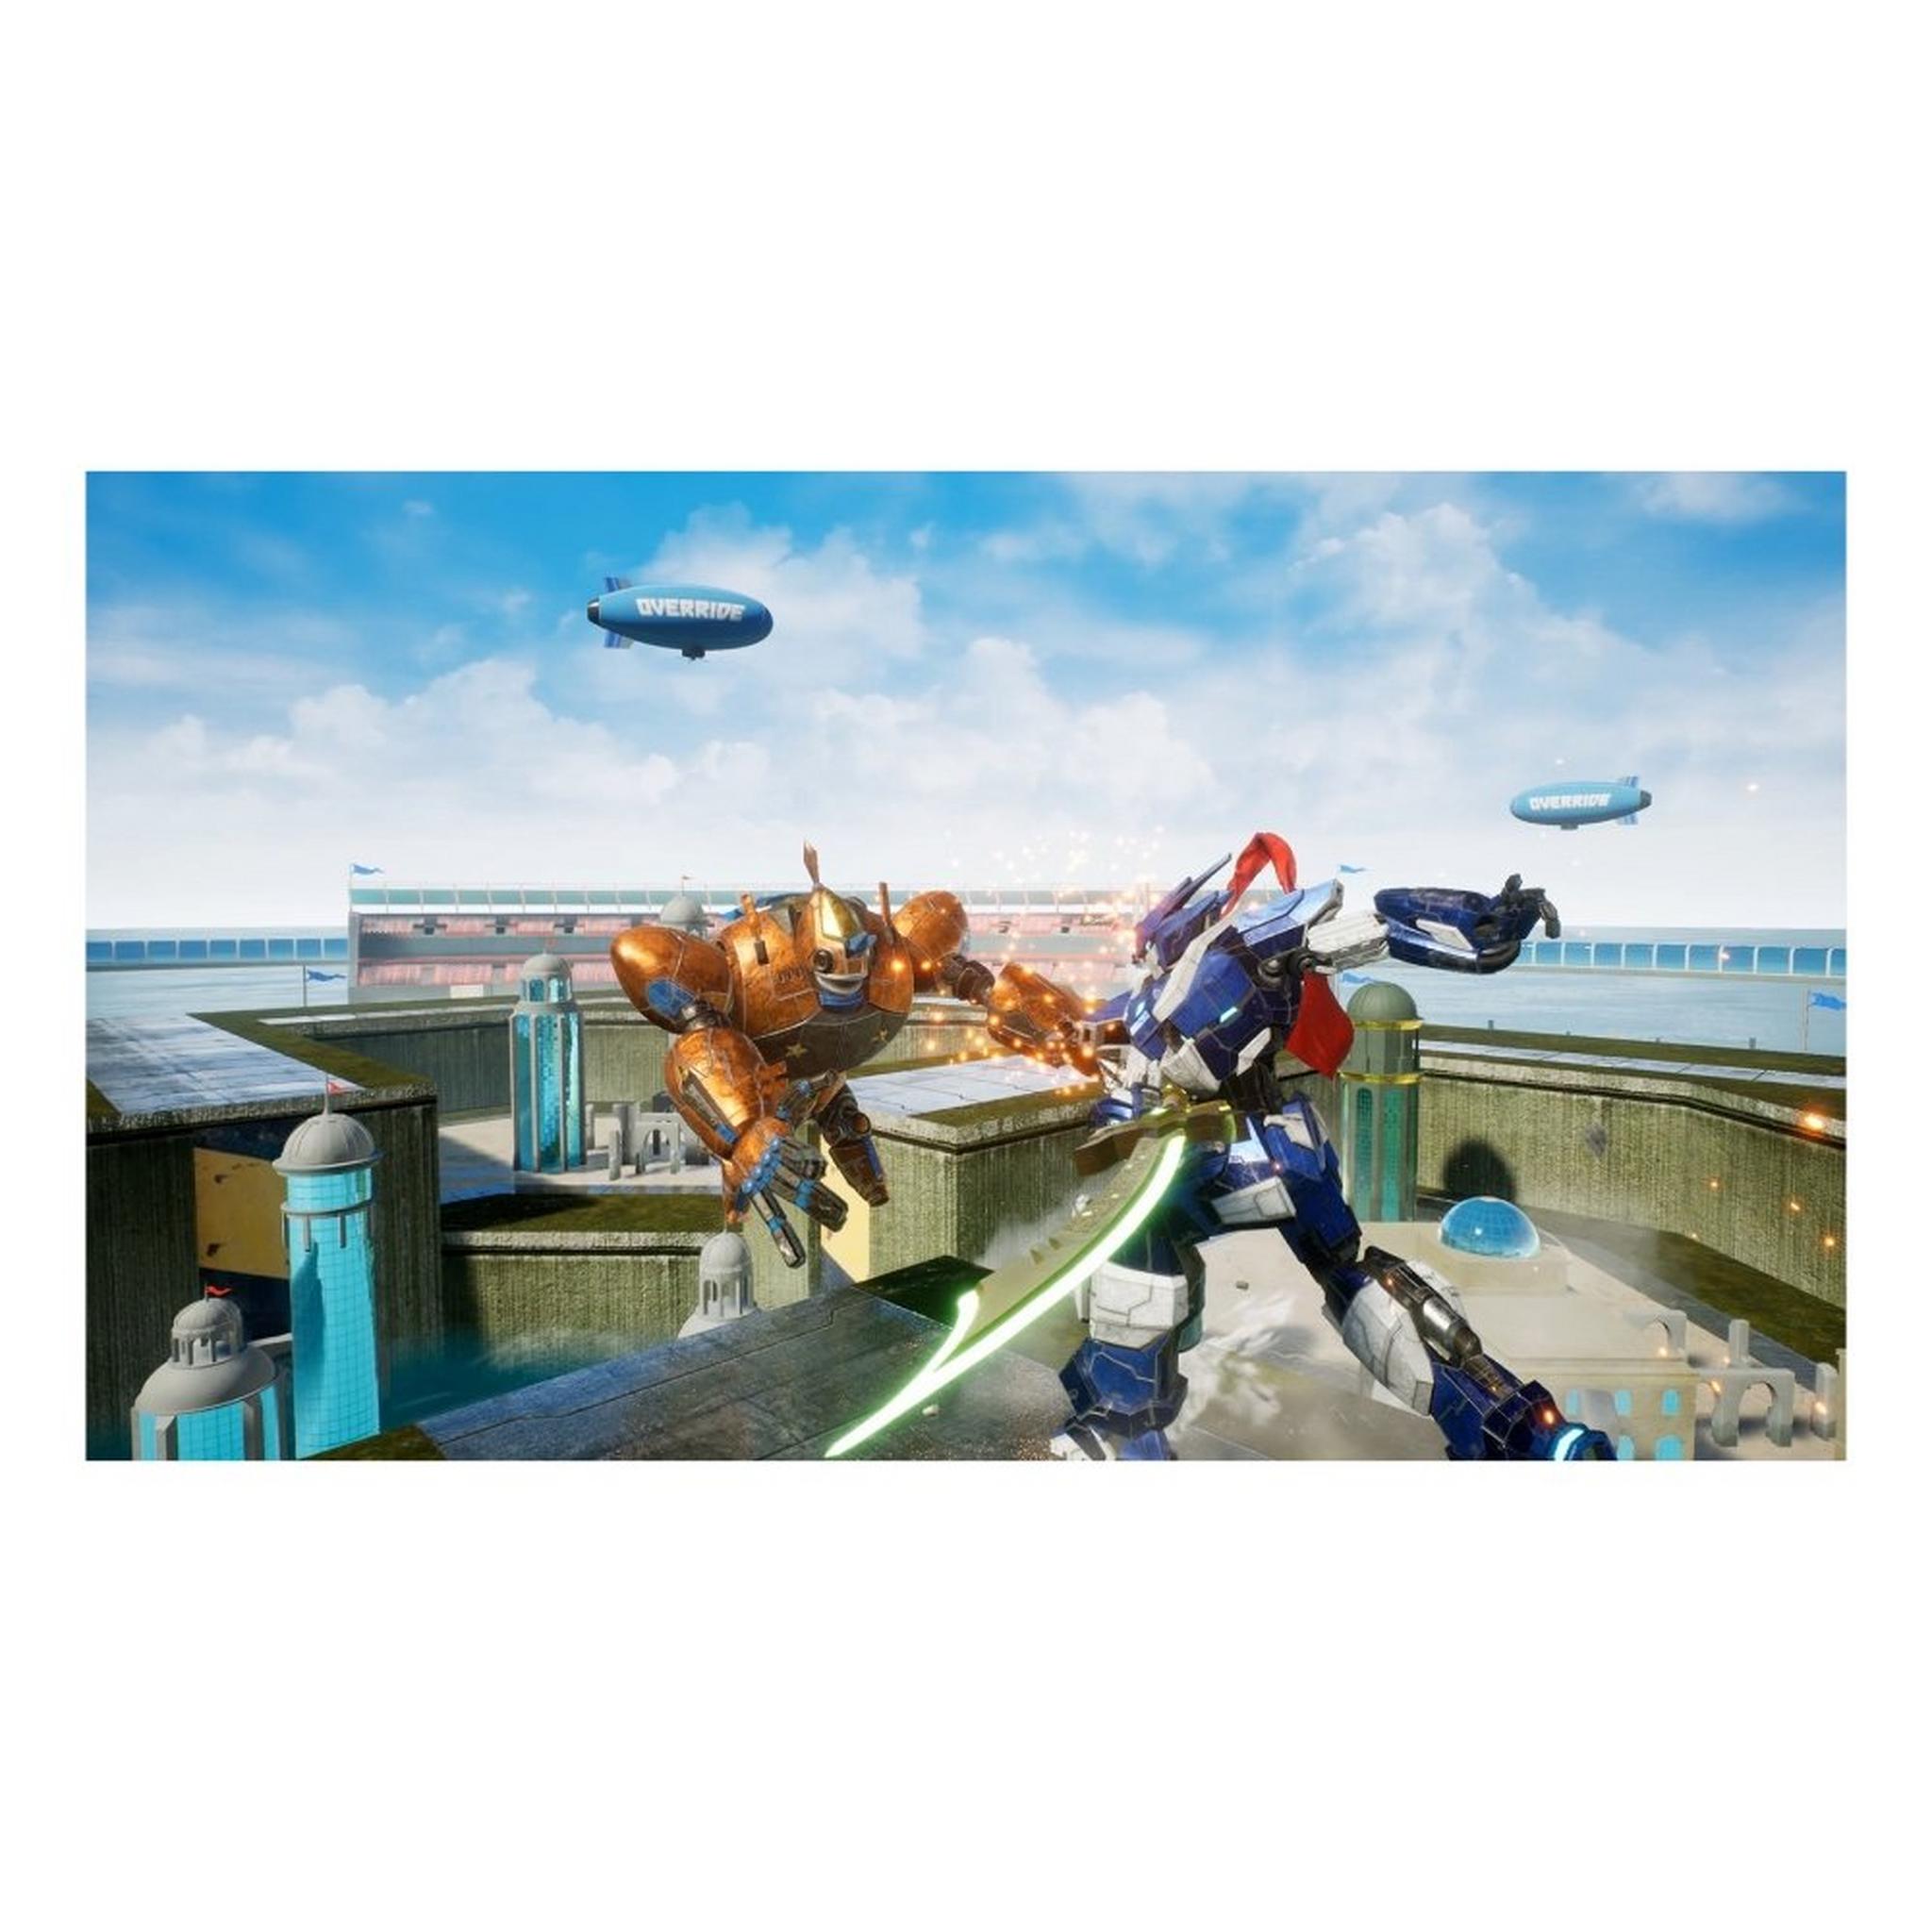 Override 2: Super Mech League - Ultraman Deluxe Edition - Xbox X Game